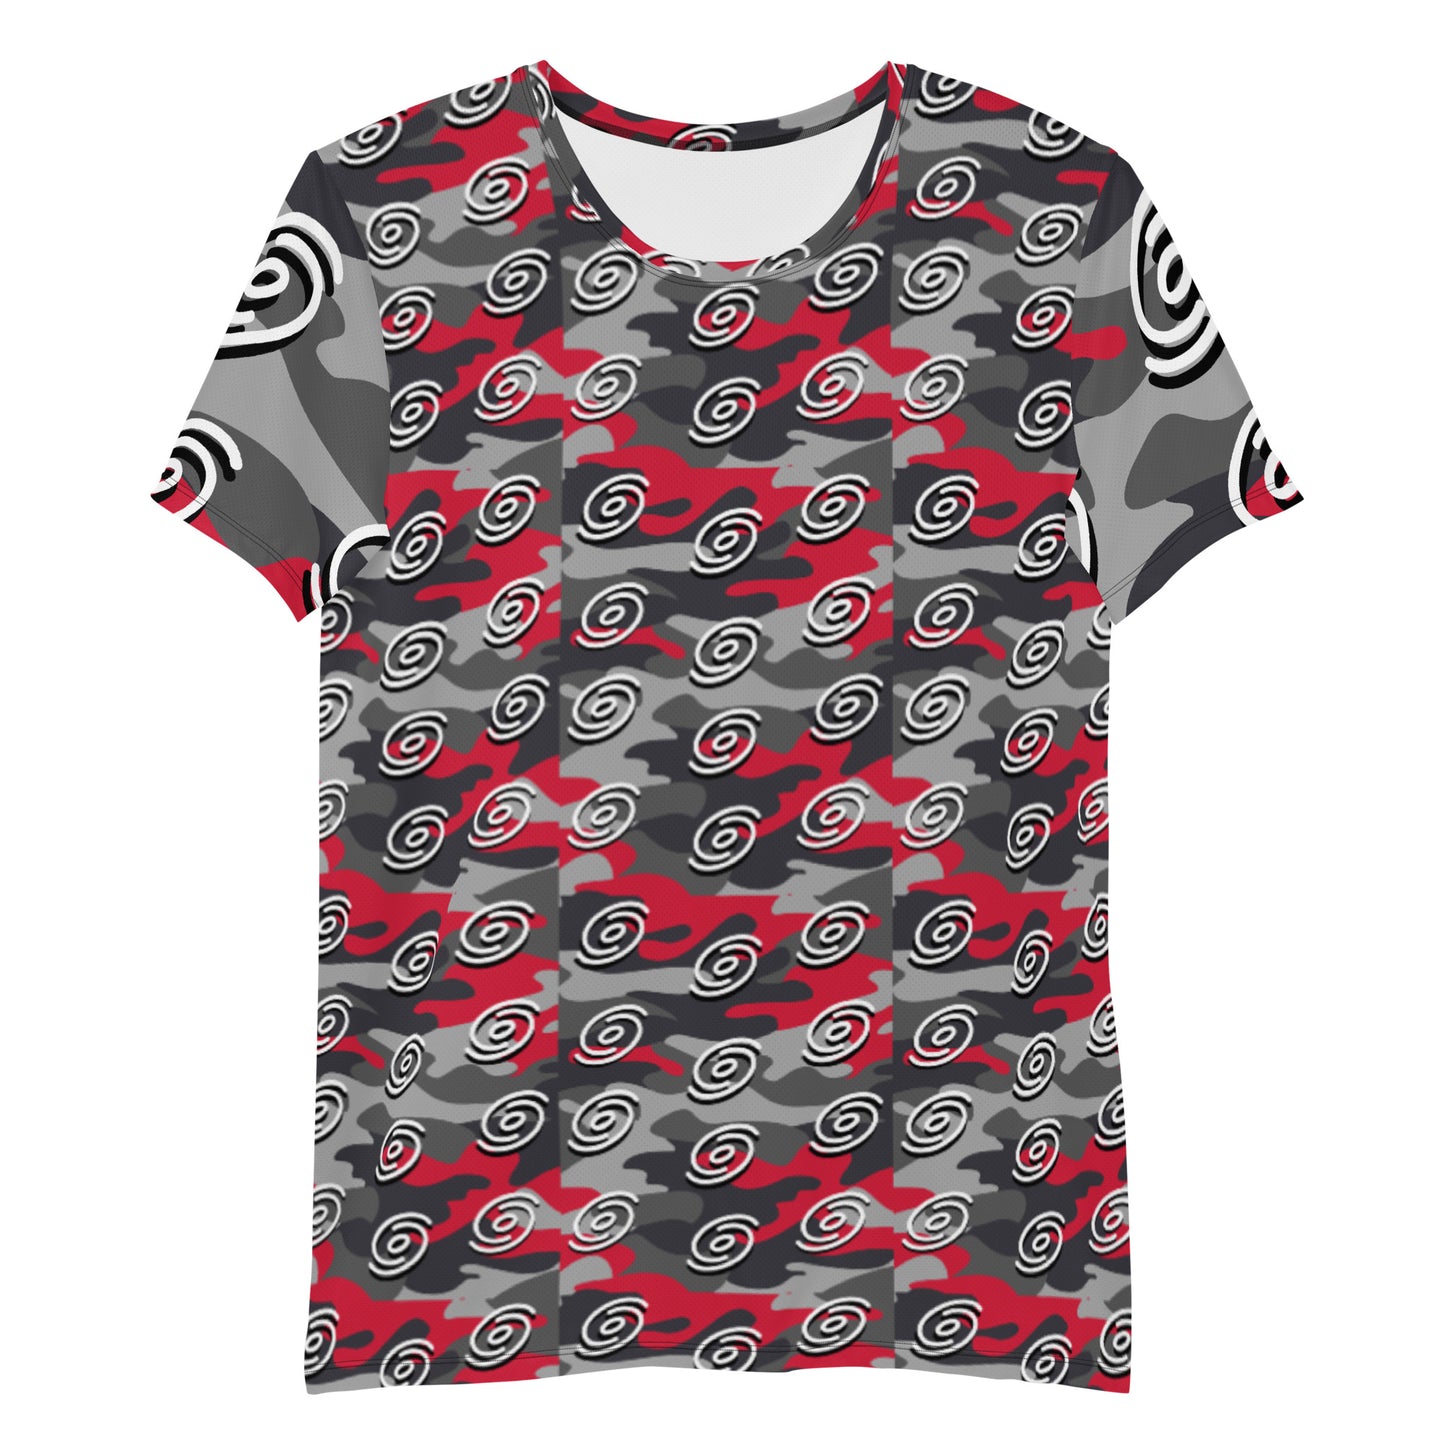 Hurricane Camo All-Over Print Men's Athletic T-shirt